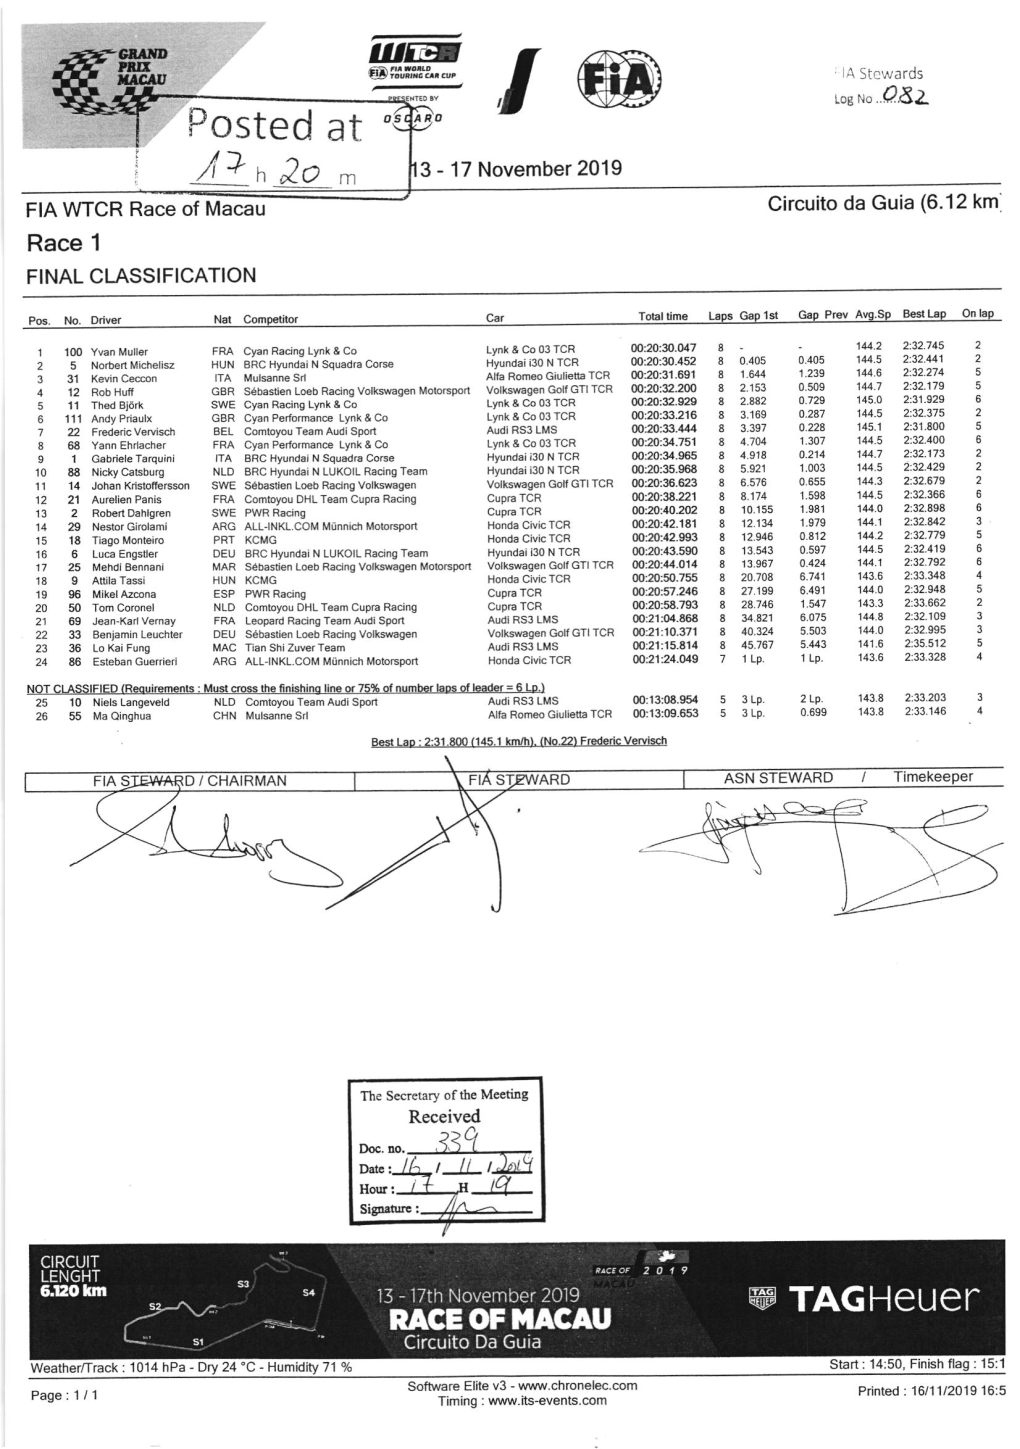 Race 1 Classification